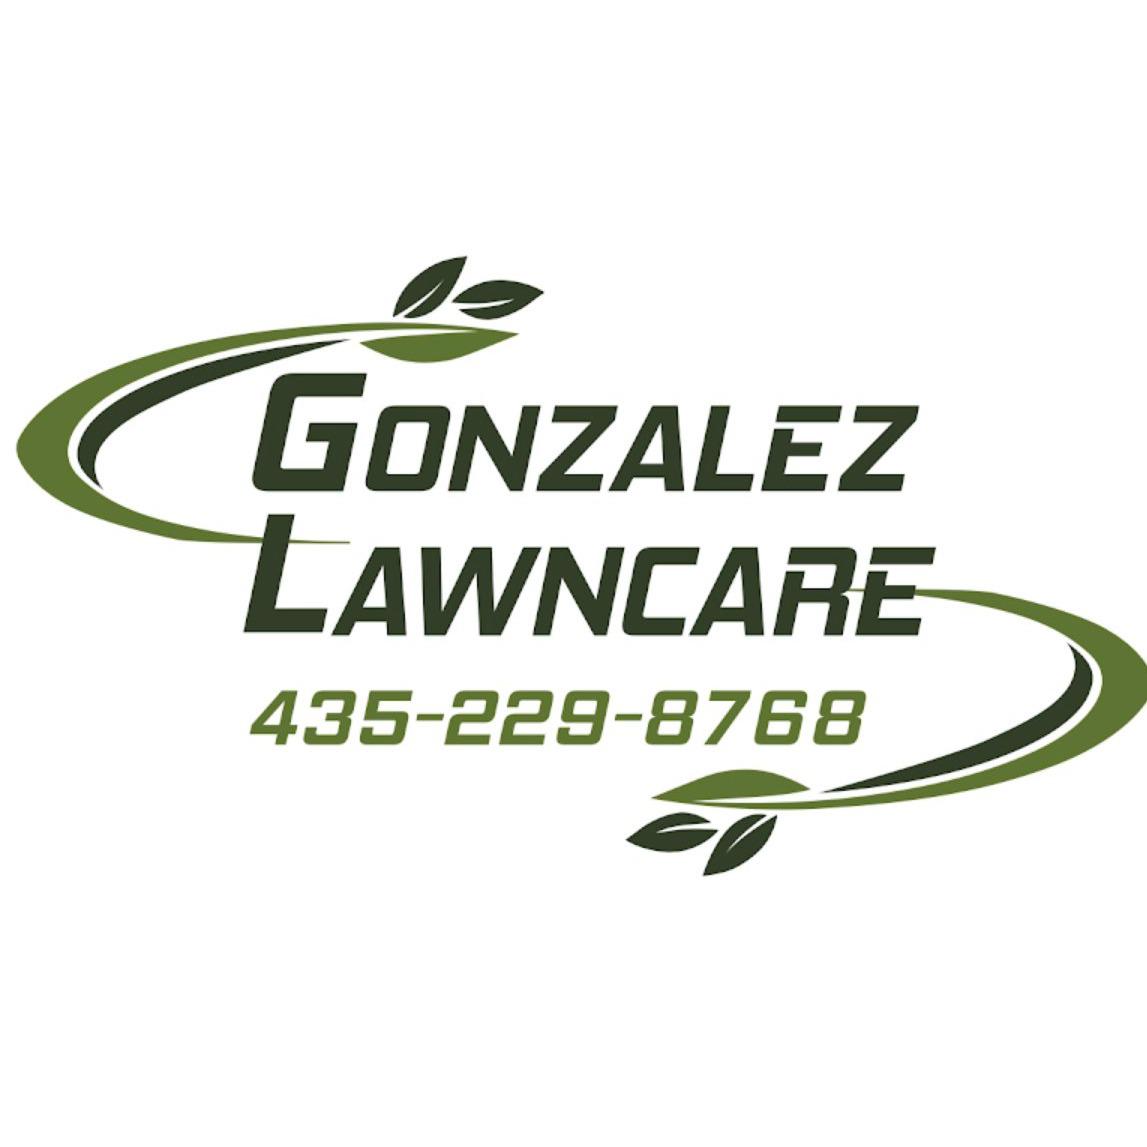 Gonzalez Lawn Care Hurricane (435)229-8768